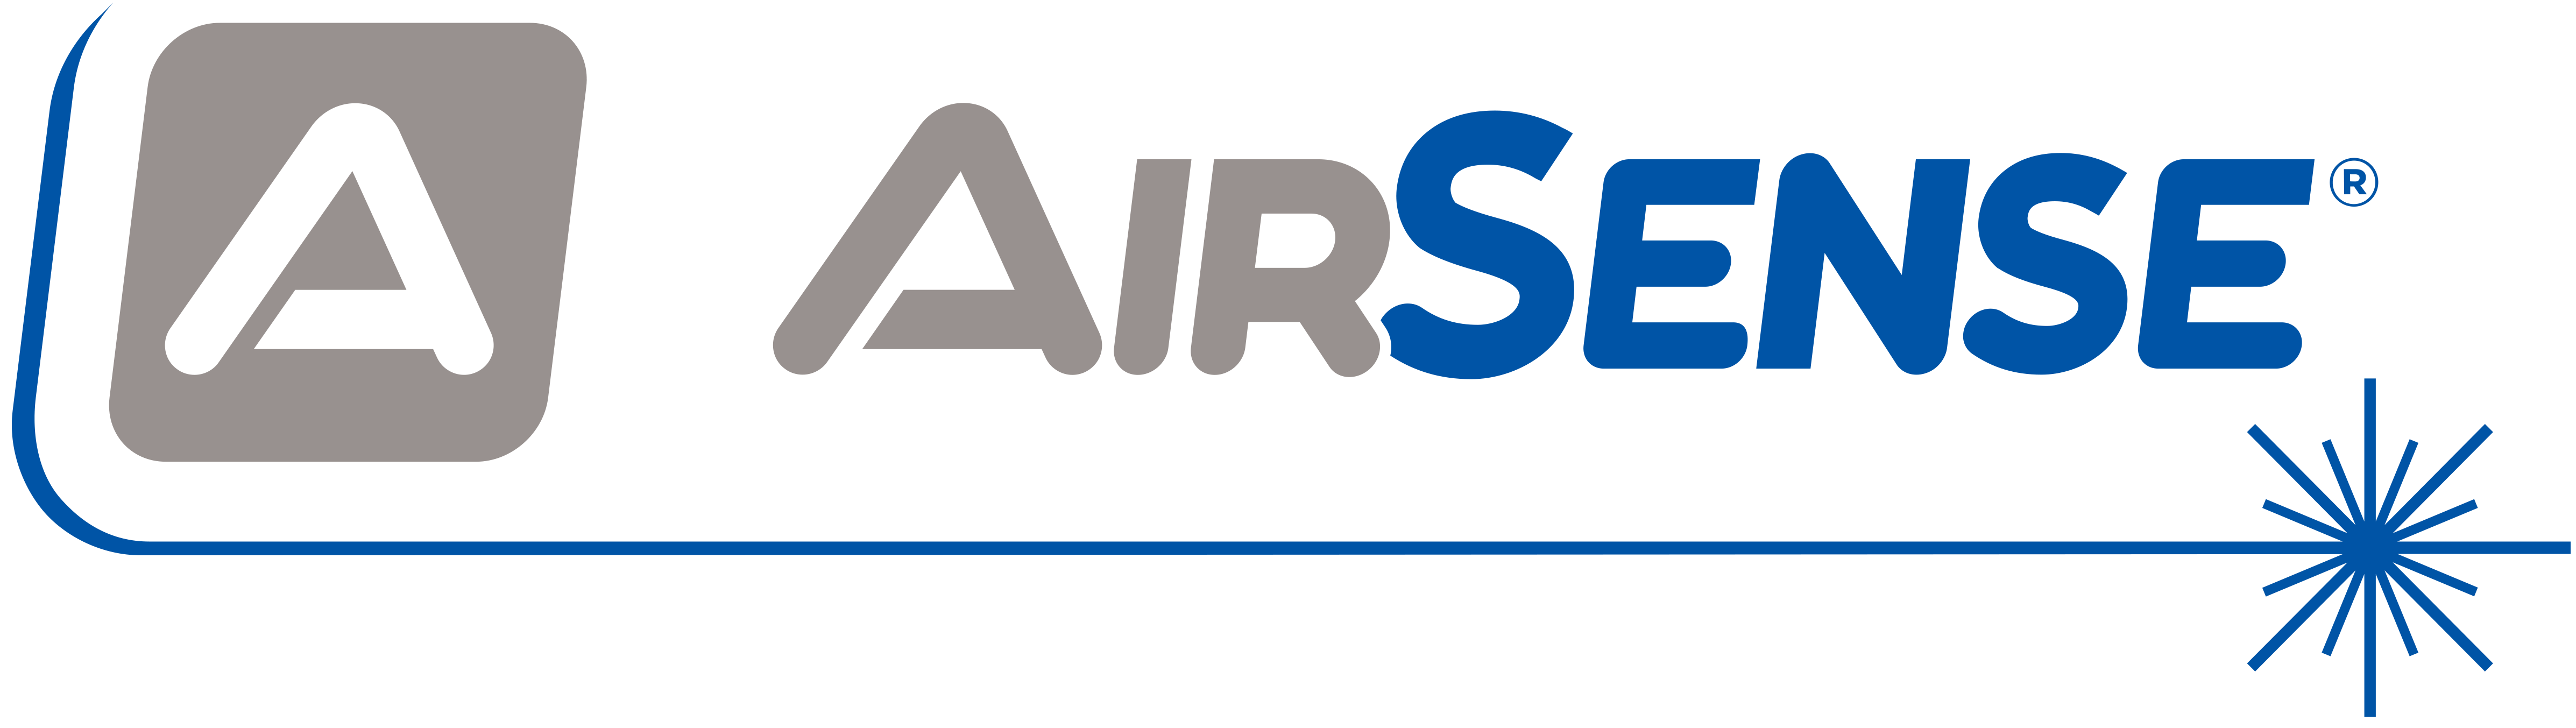 AirSense Brand Logo